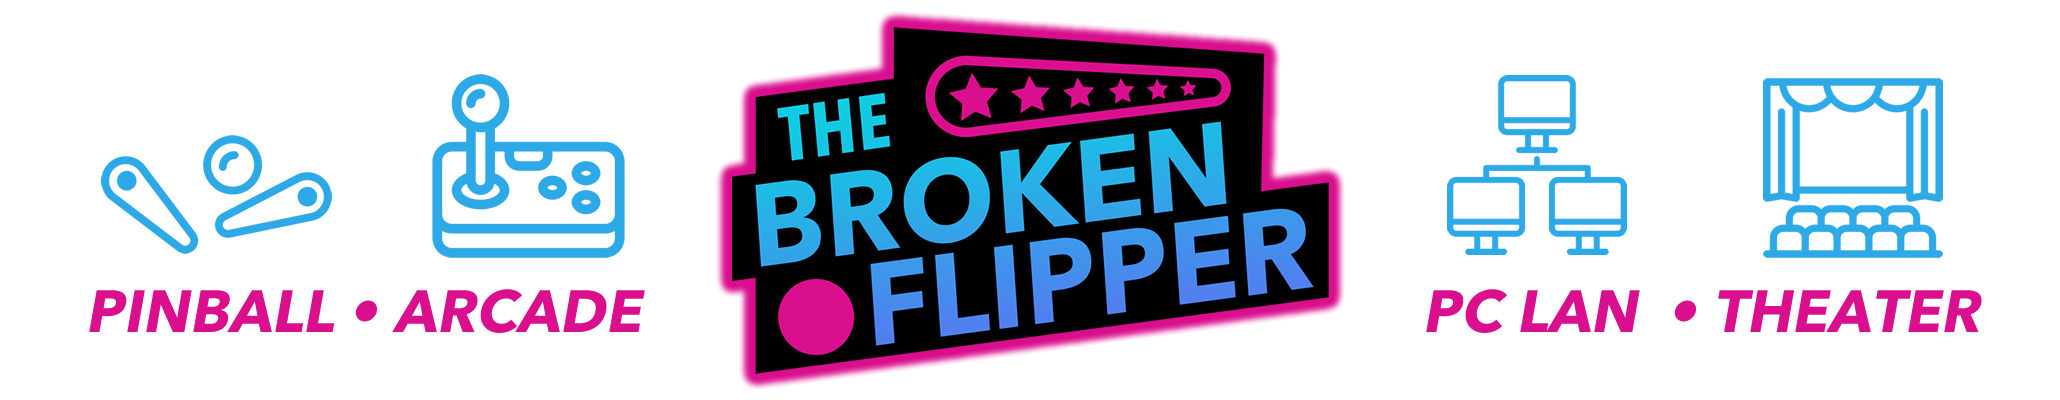 The Broken Flipper Logo. Pinball, Arcade, Drinks, Theater